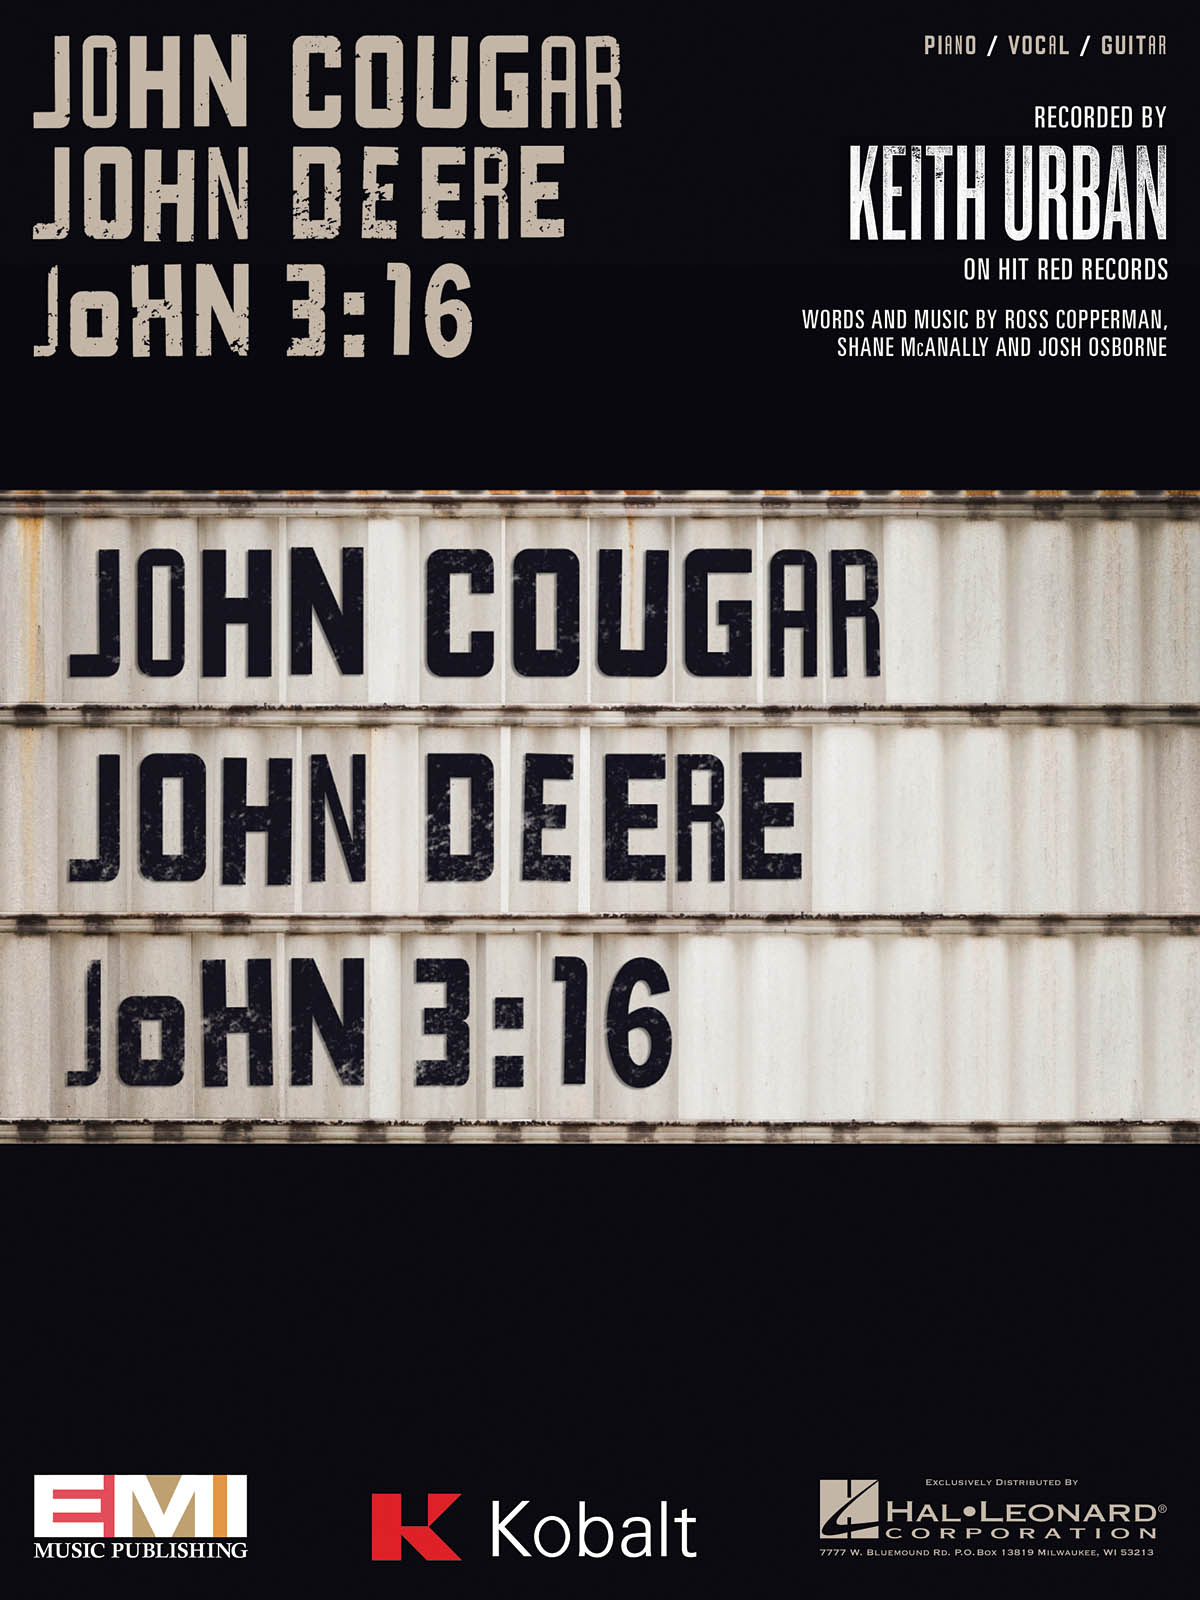 Keith Urban: John Cougar  John Deere  John 3:16: Piano  Vocal and Guitar: Single